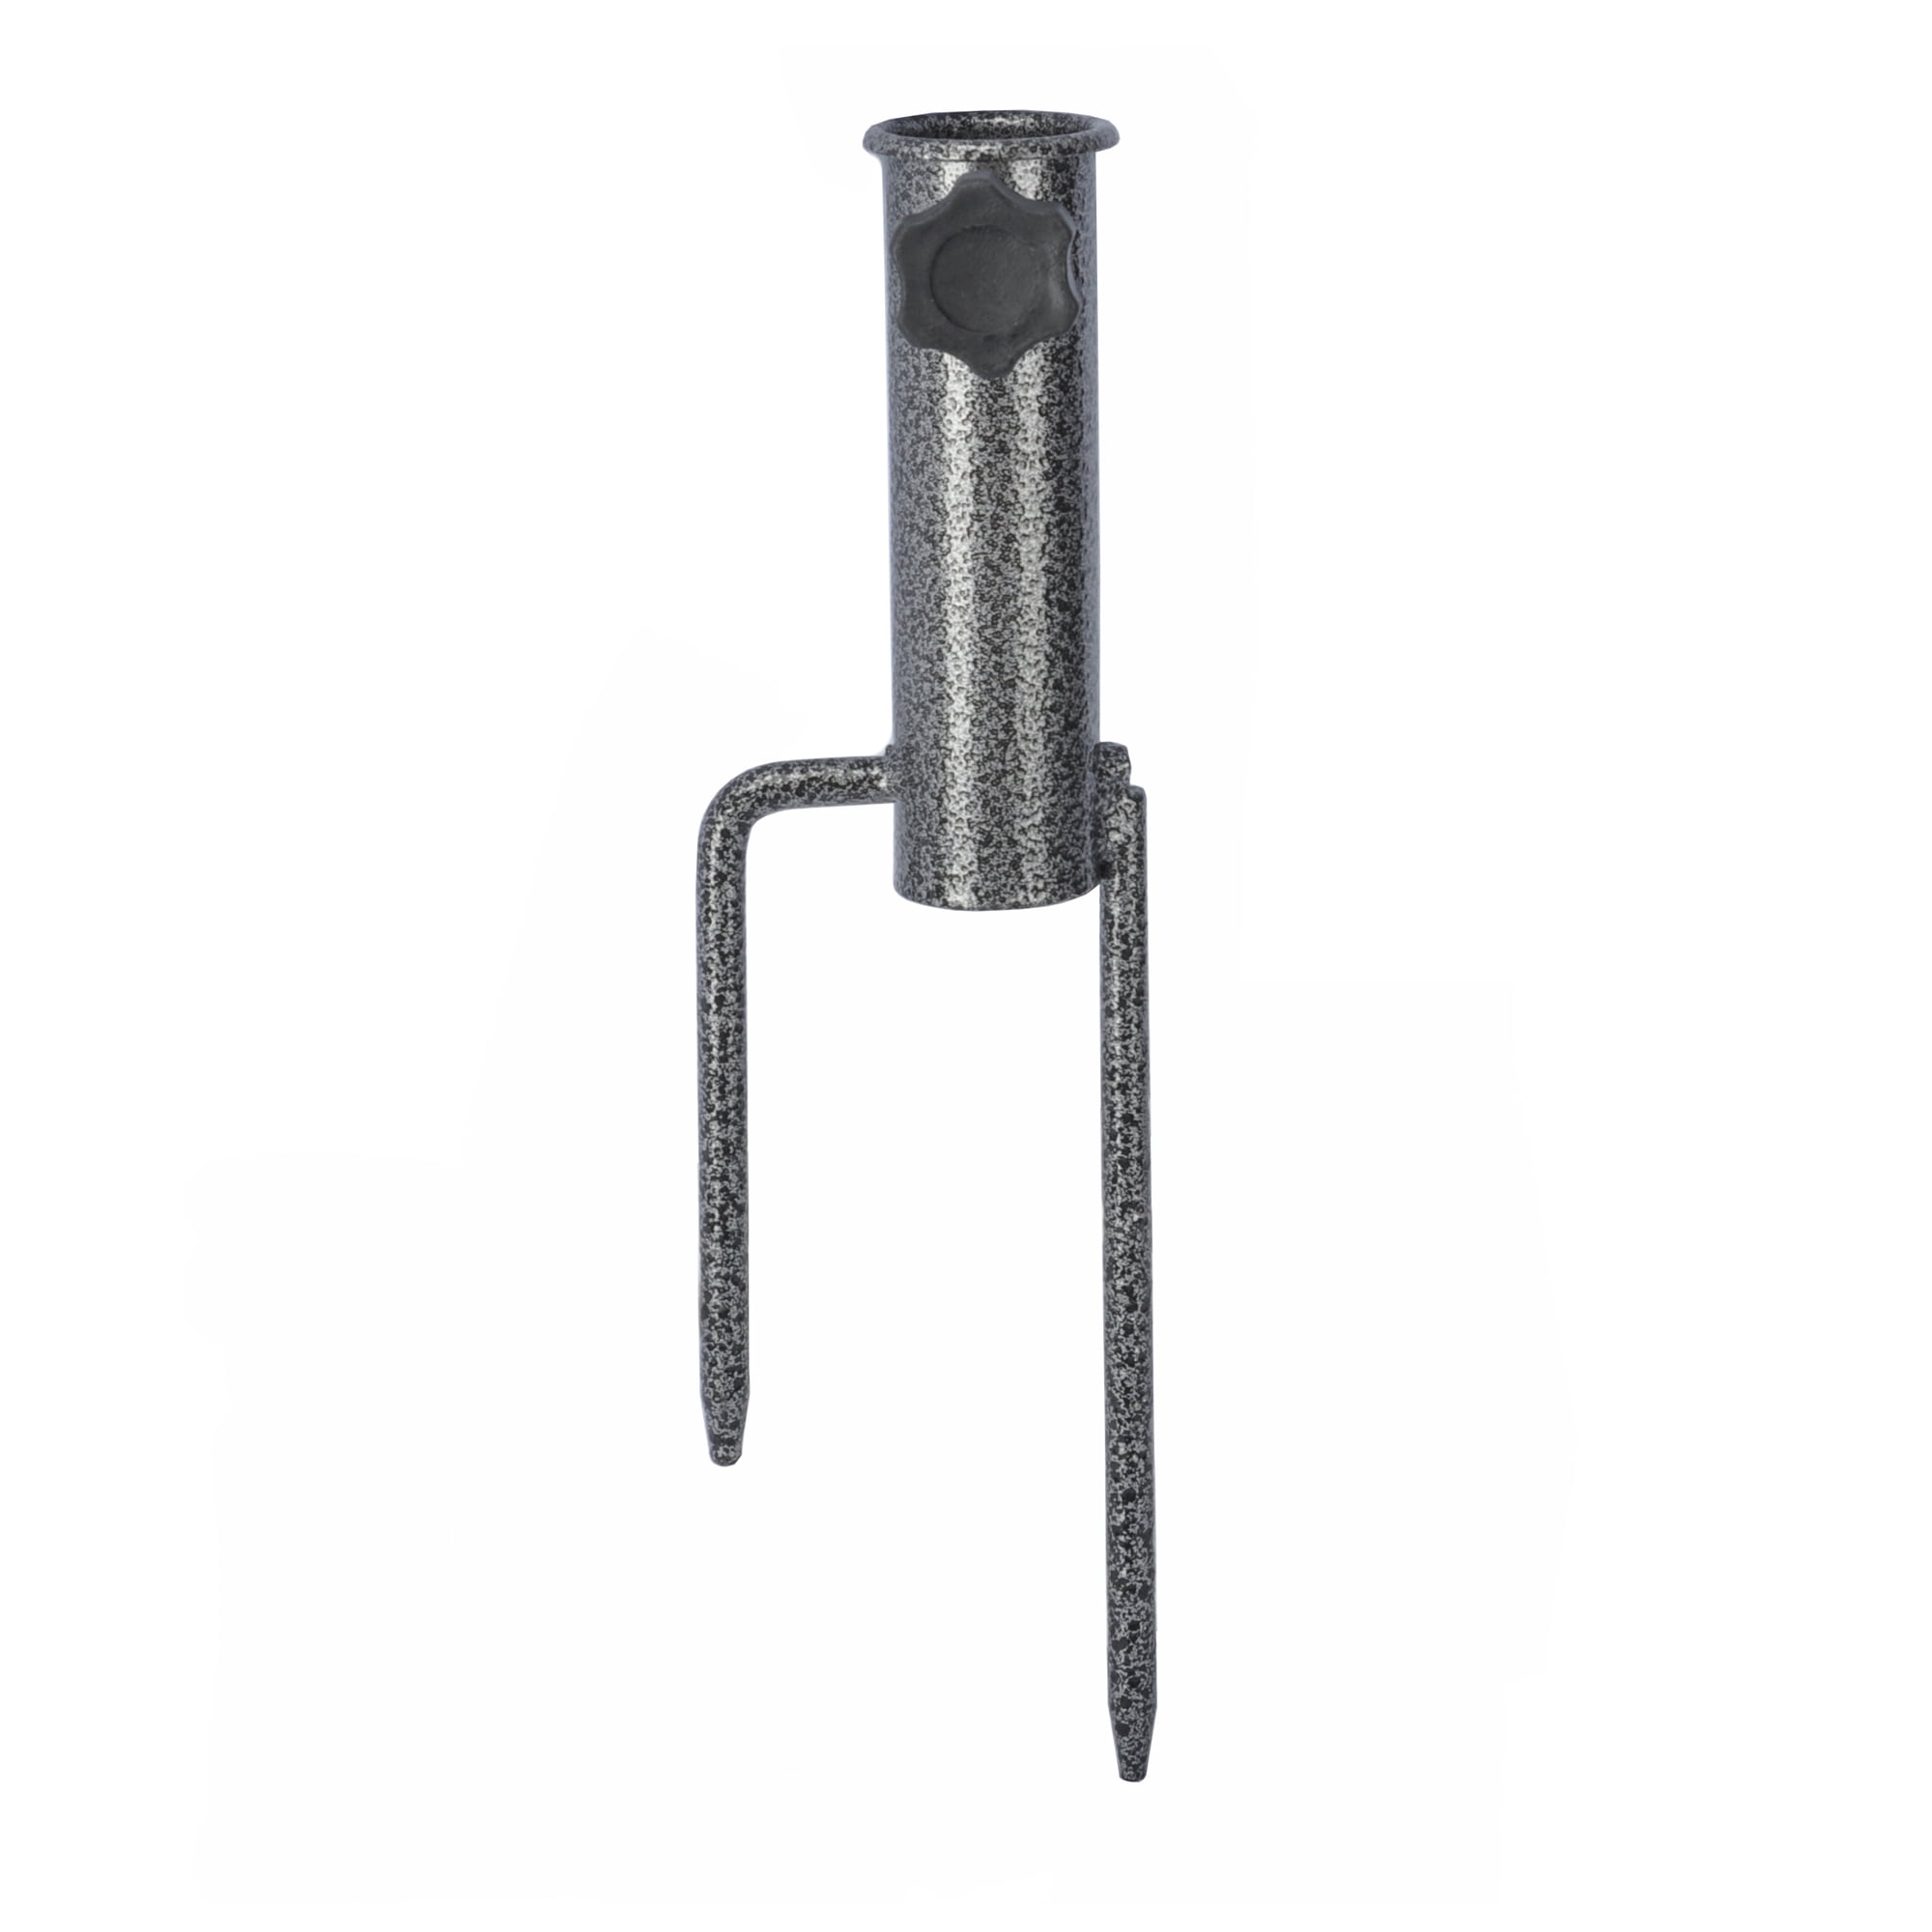 Two Forks 35mm Myard Patio Ground Sand Beach Umbrella Steel Anchor Diameter 1 3/8 